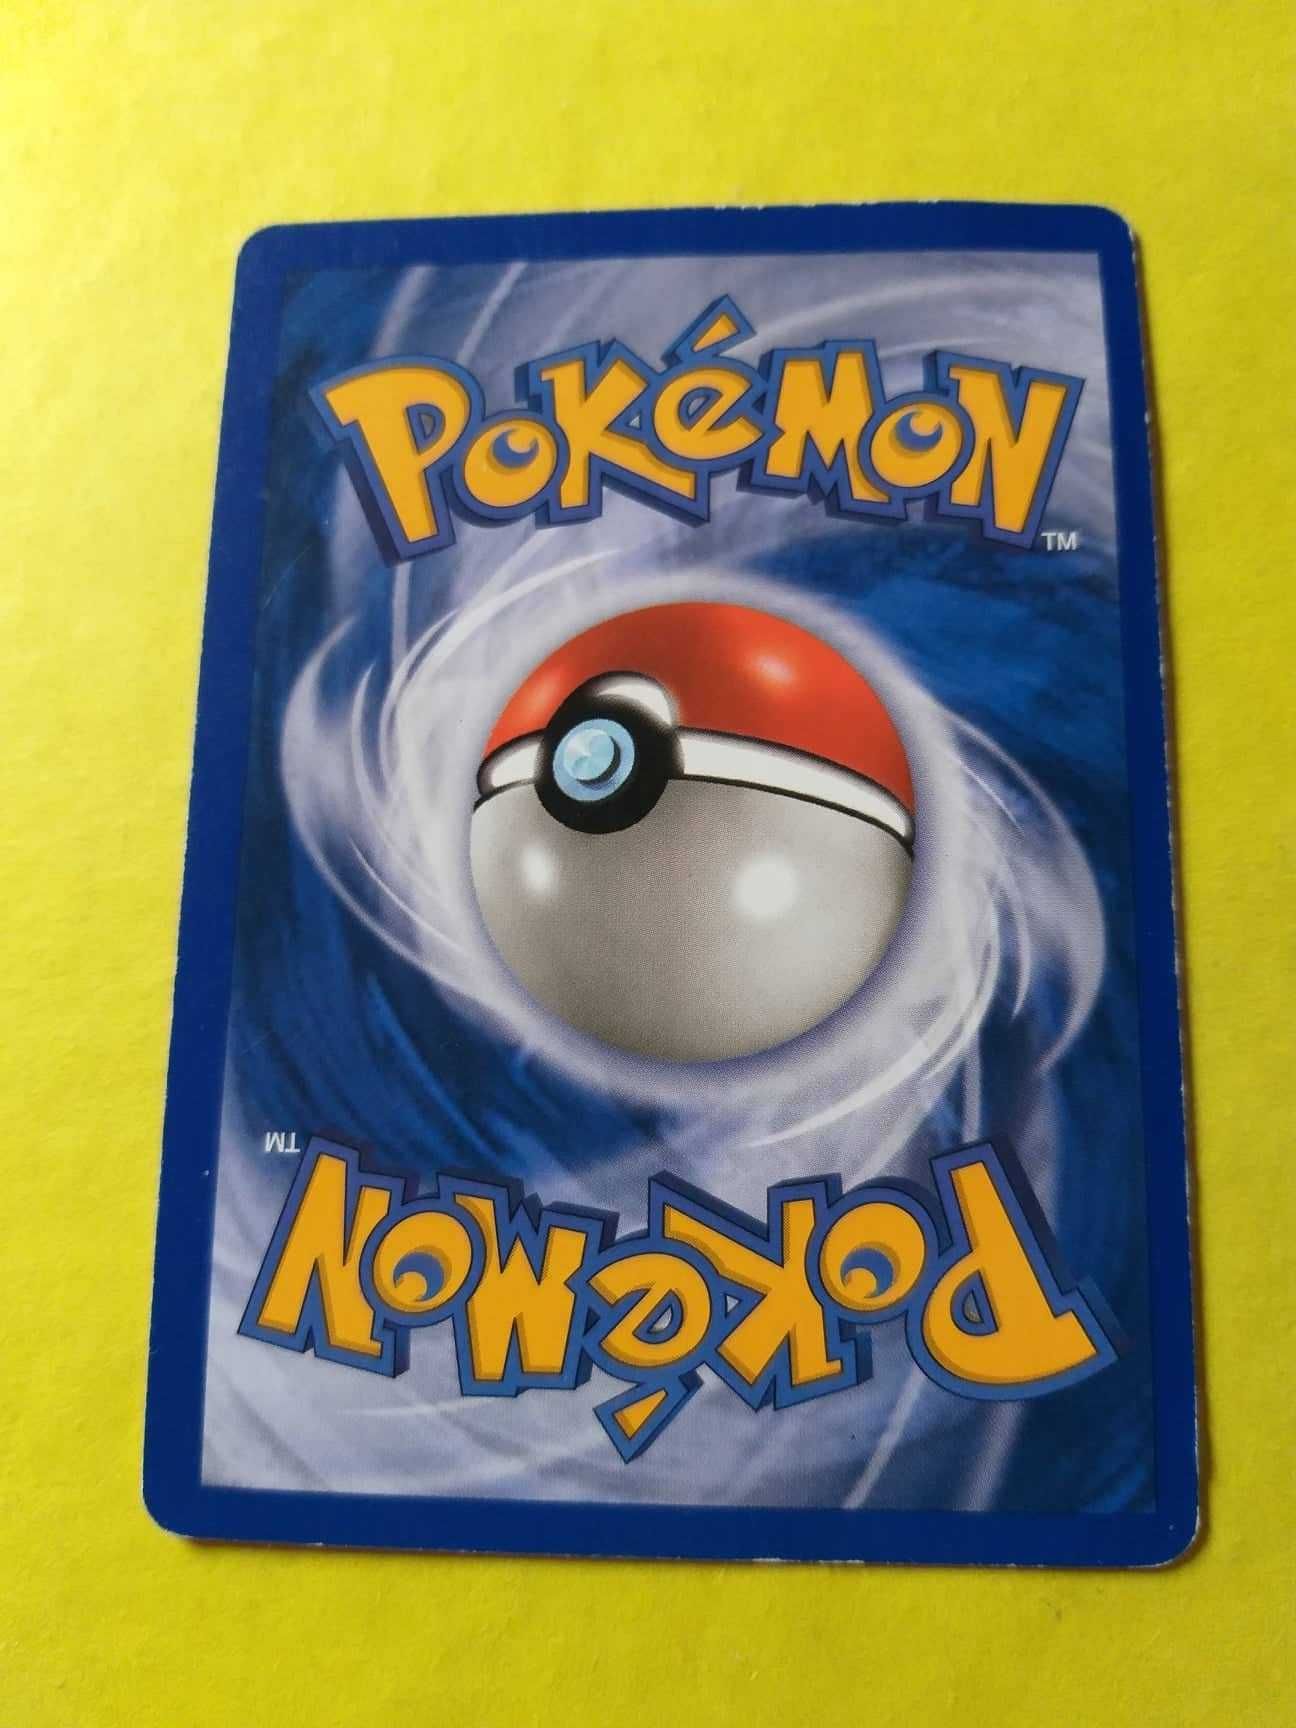 Pokemon Card- Medicham LV. 42 HP 90